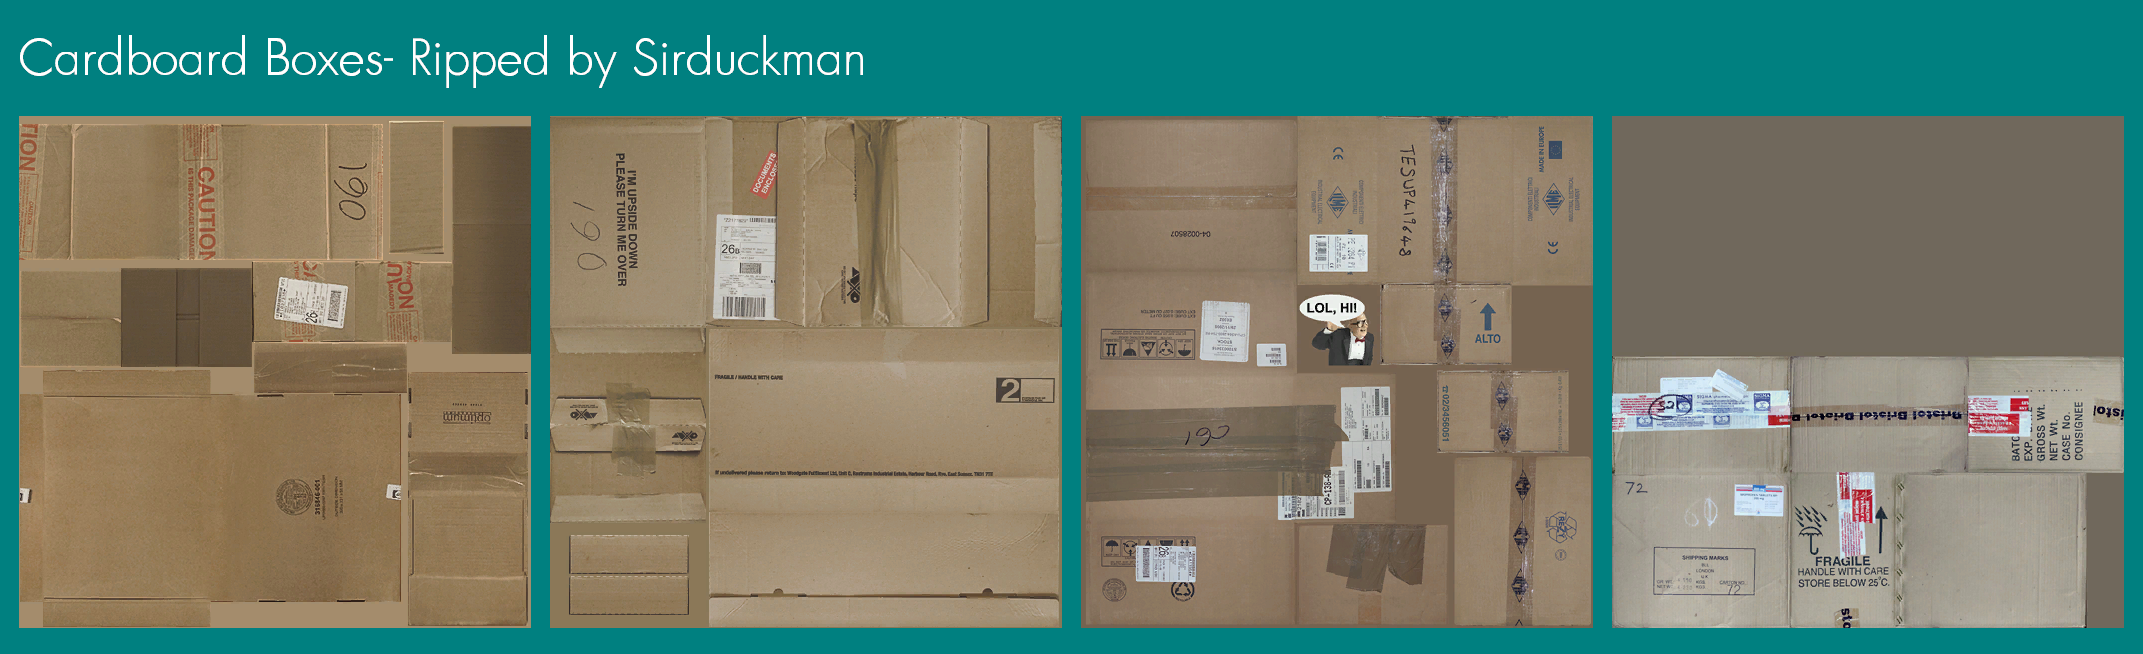 Black Mesa - Cardboard Boxes